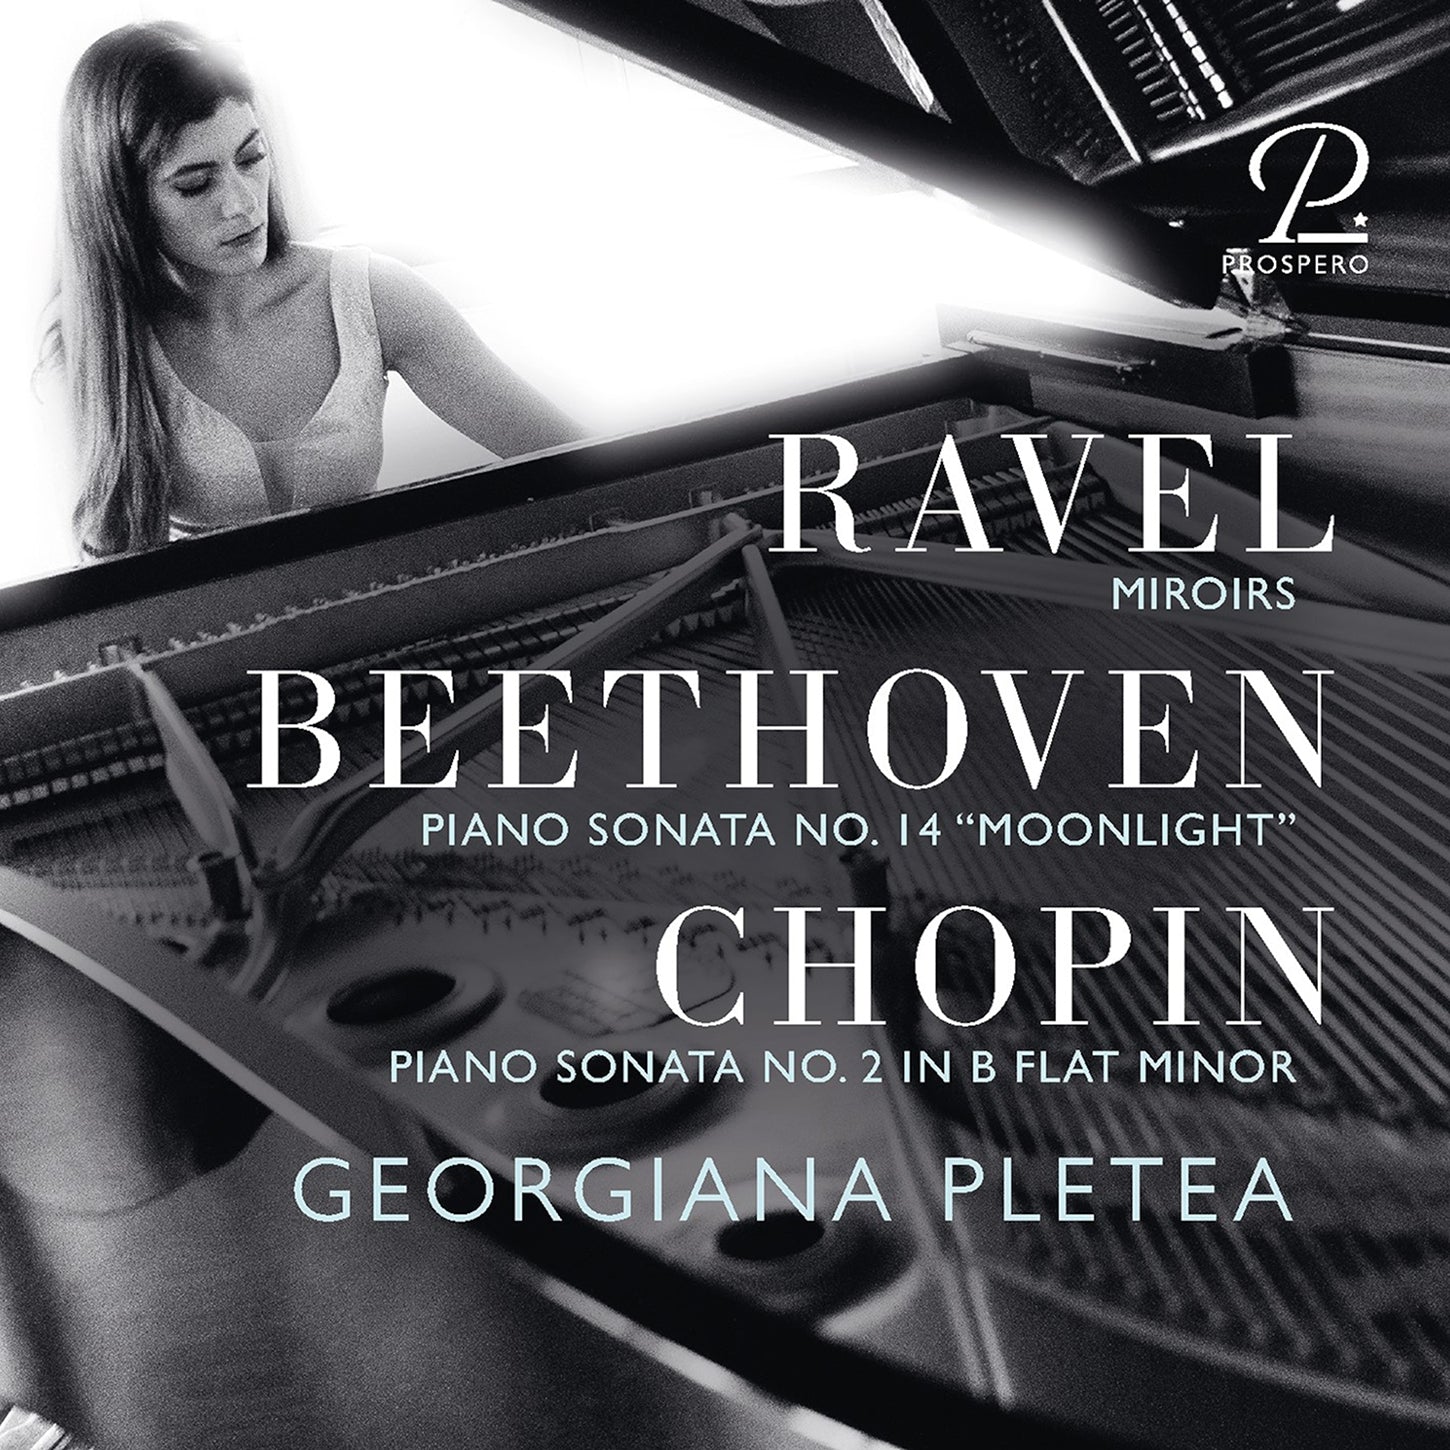 Ravel, Beethoven, & Chopin: Piano Works / Pletea